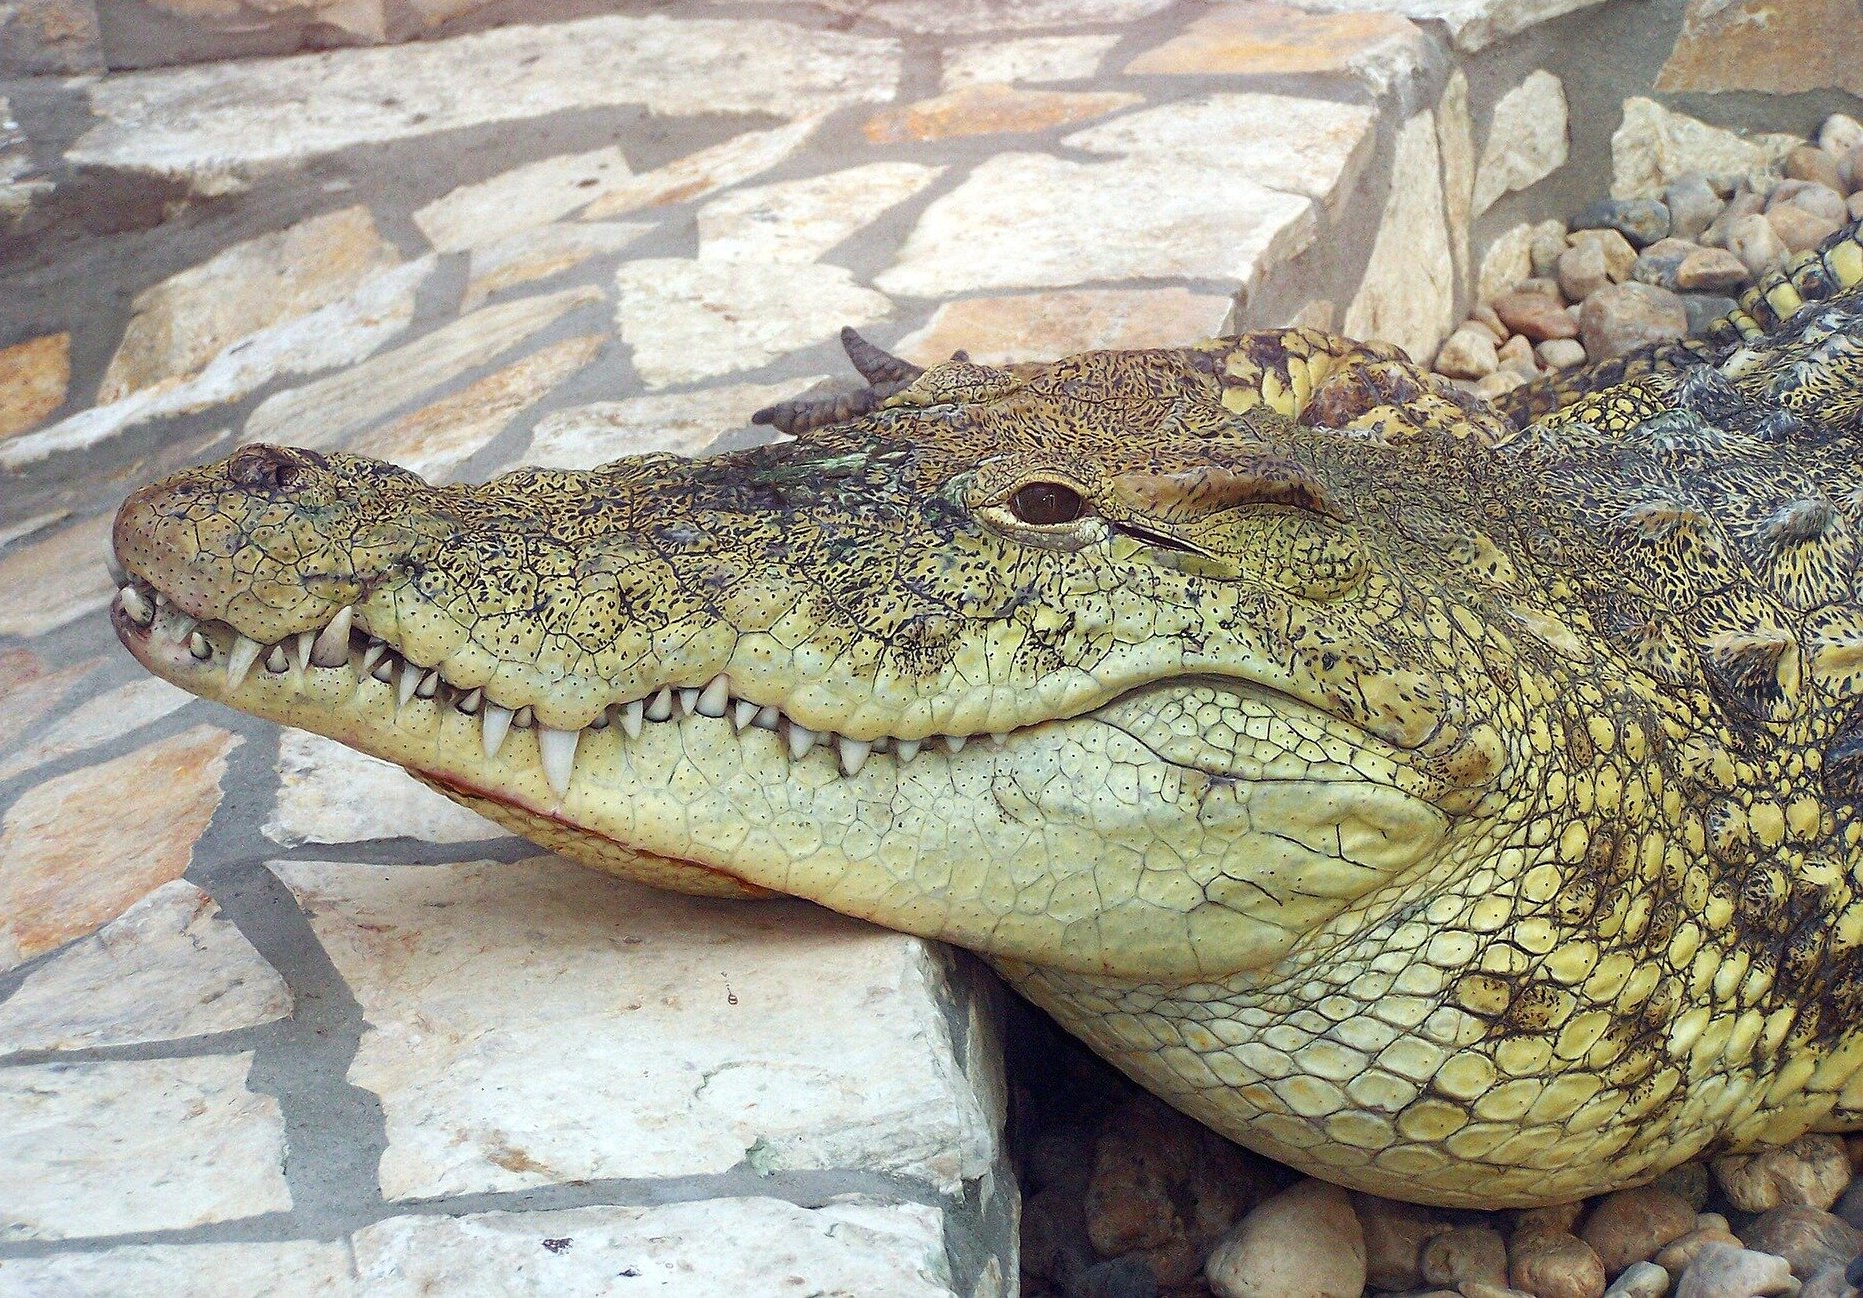 AFRICA: Louis Vuitton enforces purchasing criteria for crocodile skins